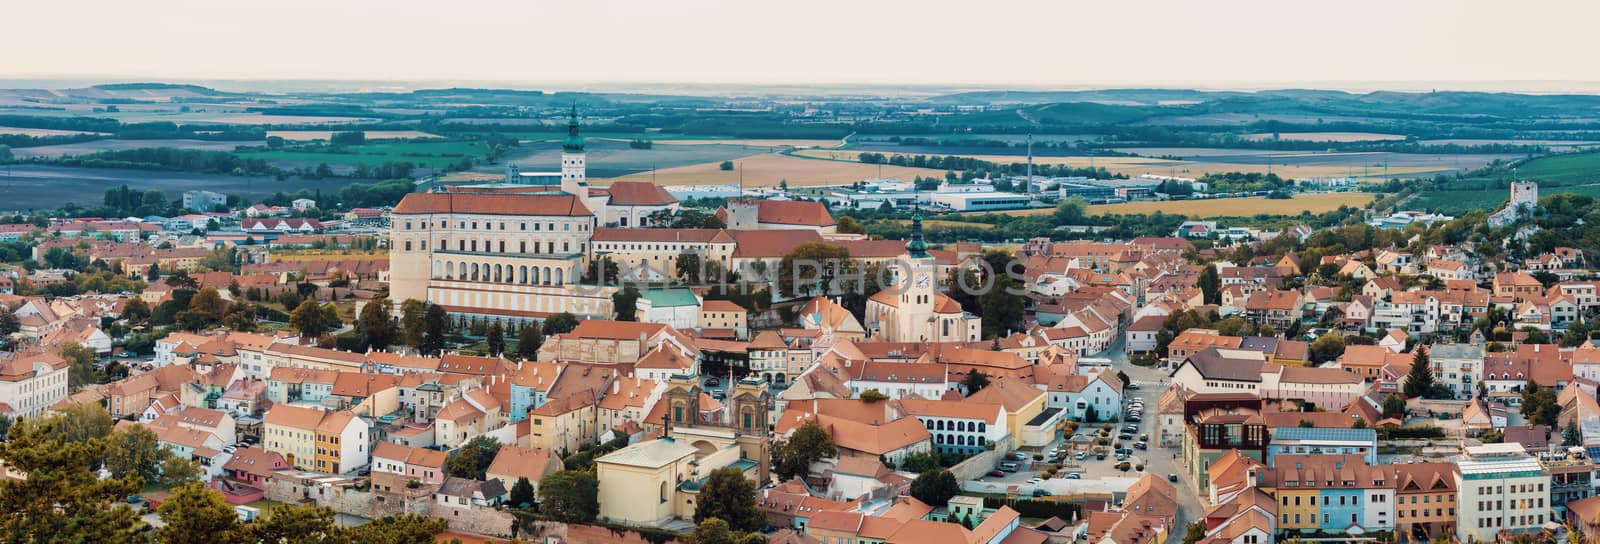 Mikulov city and castle, view from St. Sebastiano's chapel (Svaty Kopecek) - Mikulov, South Moravia, Czech Republic